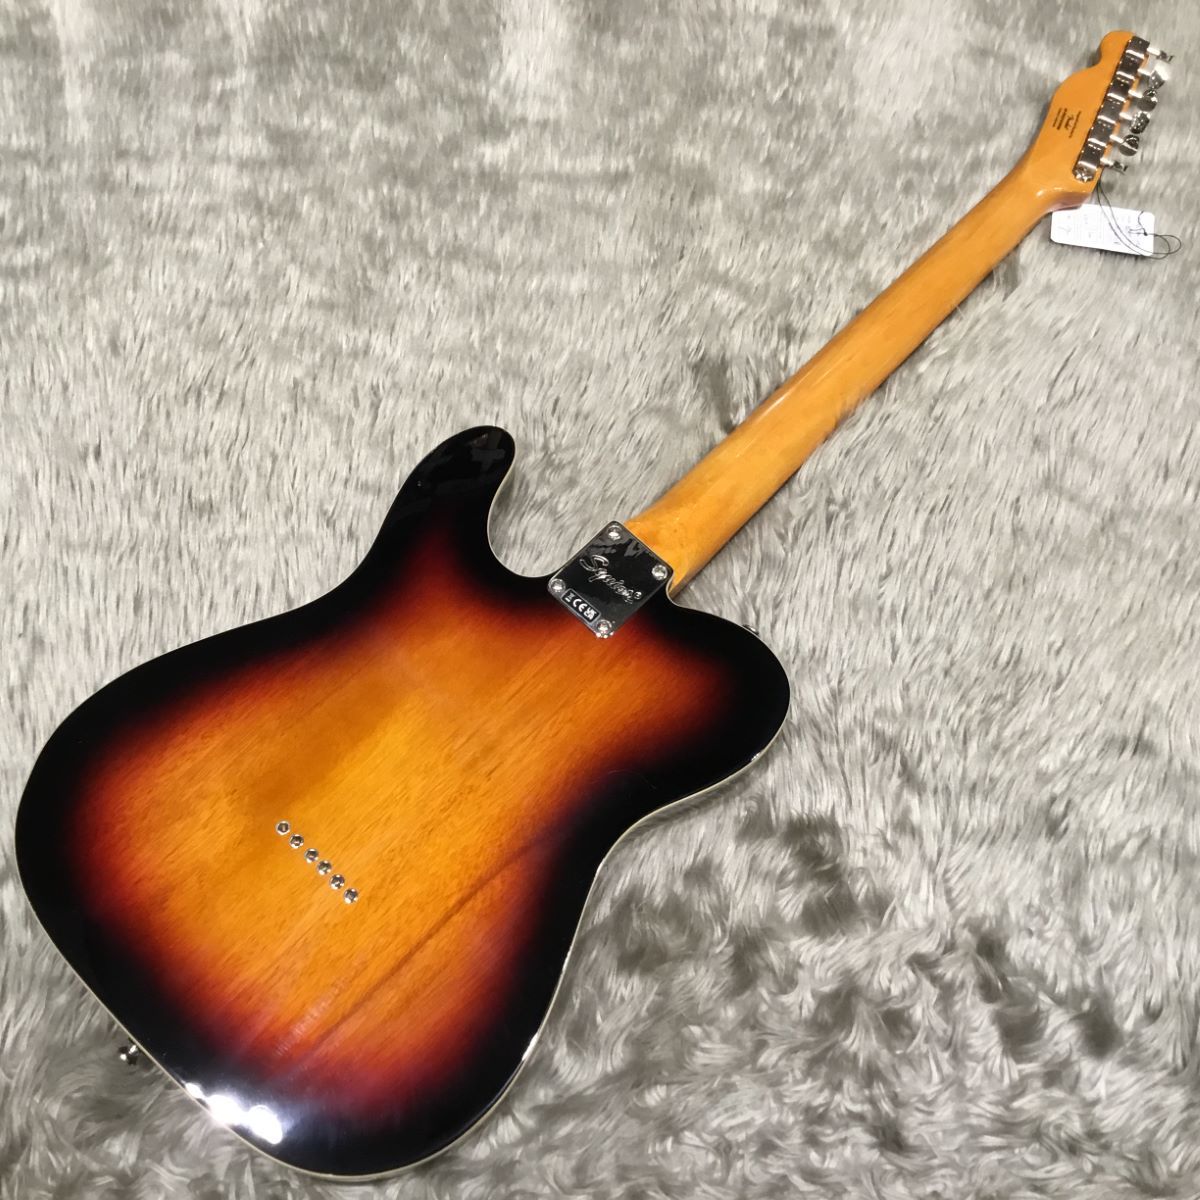 Squier by Fender Classic Vibe Baritone Custom Telecaster エレキ 